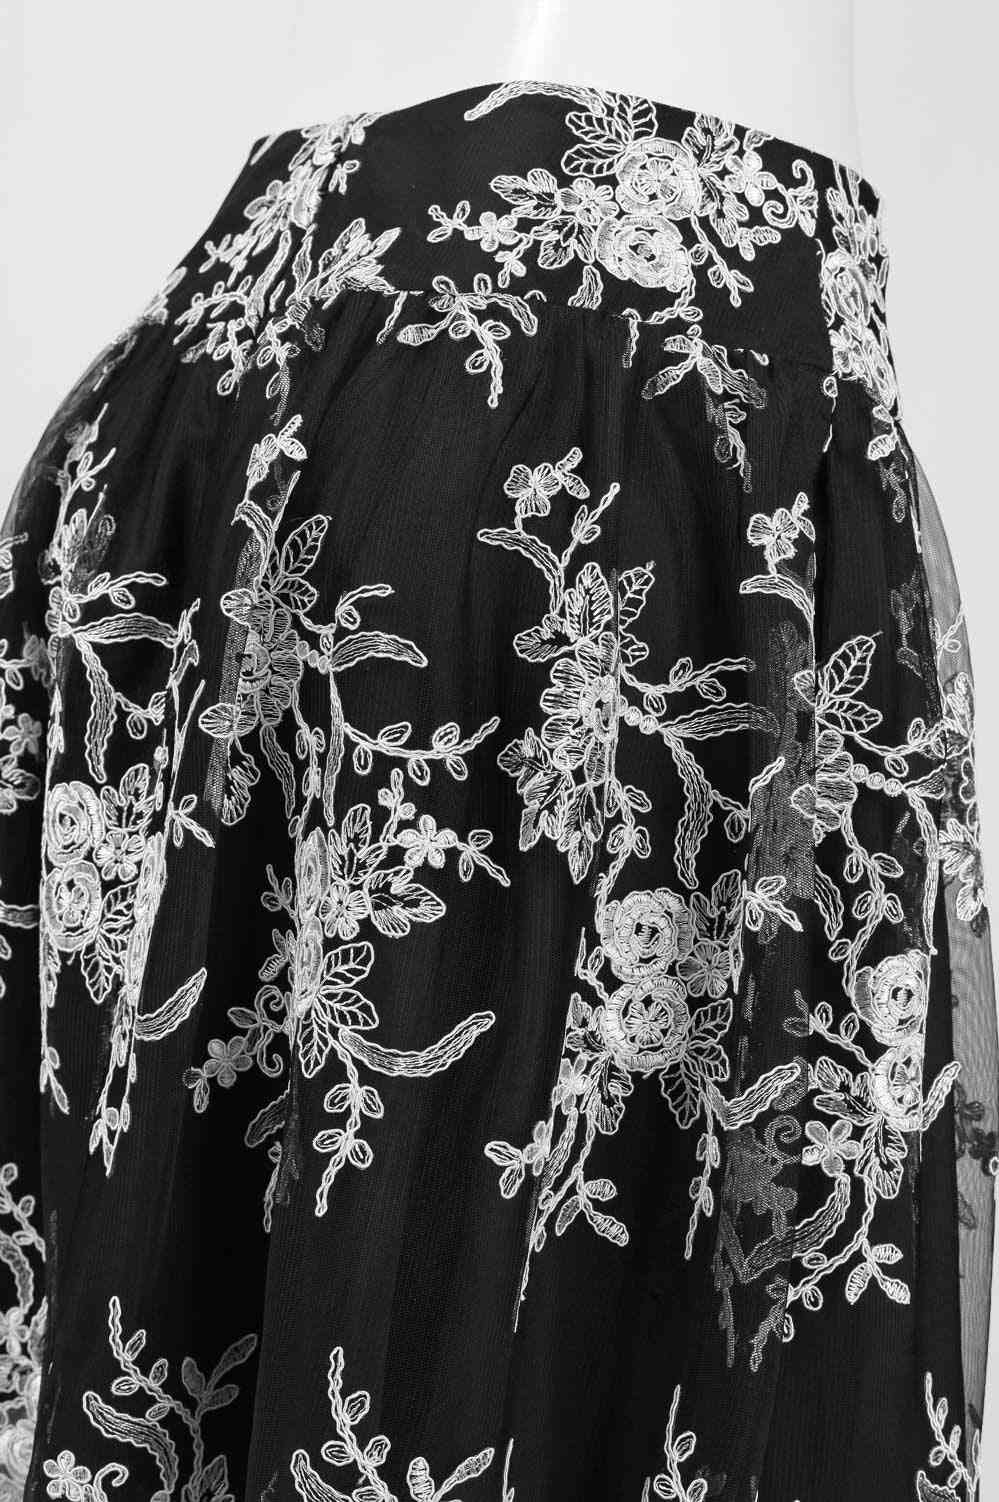 Mid Rise Waist Floral Pattern Mesh Skirt